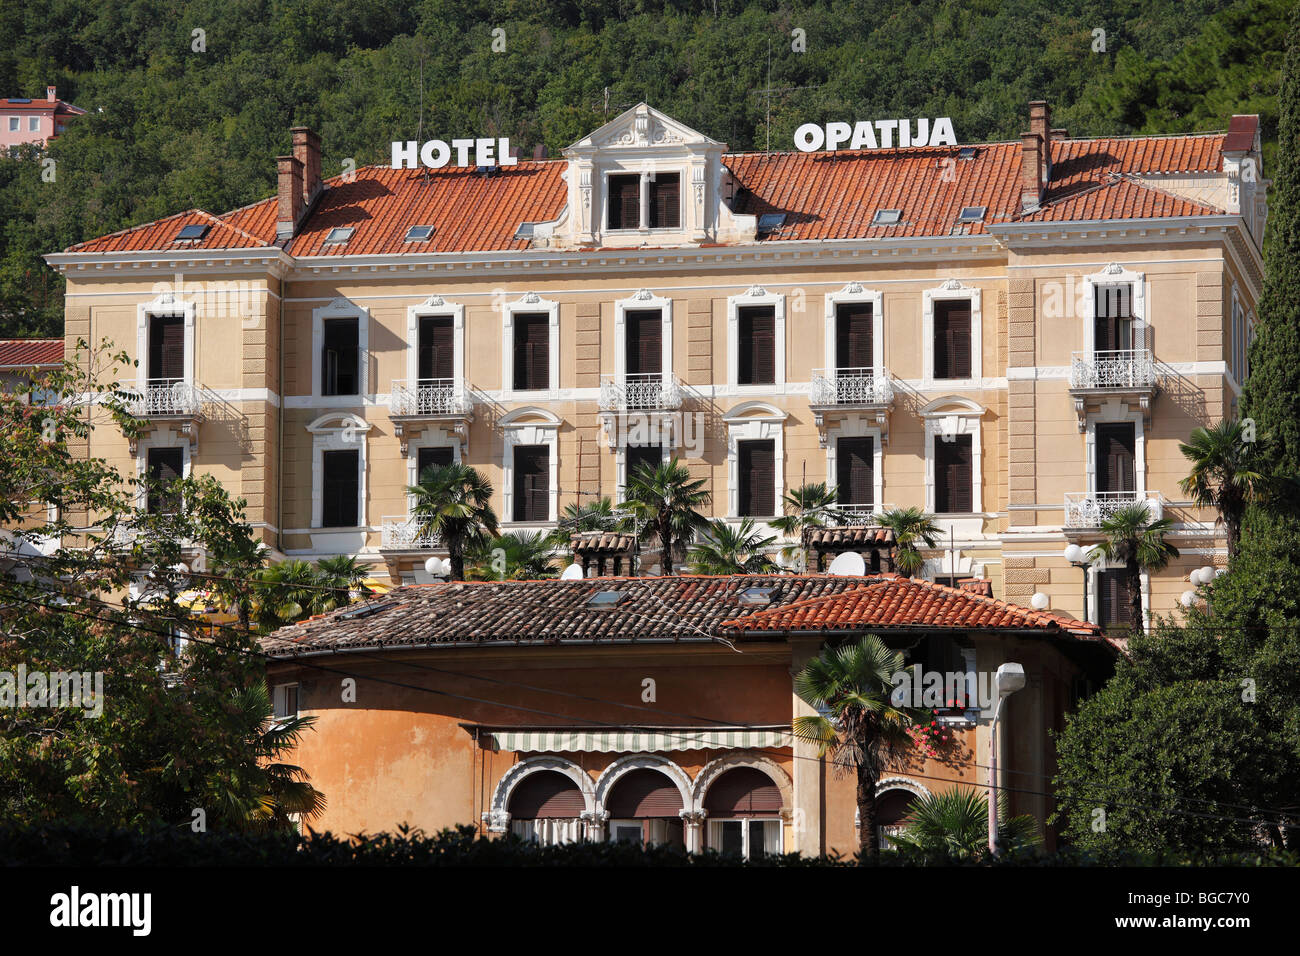 Hotel Opatija, Opatija, Istria, Croatia, Europe Stock Photo